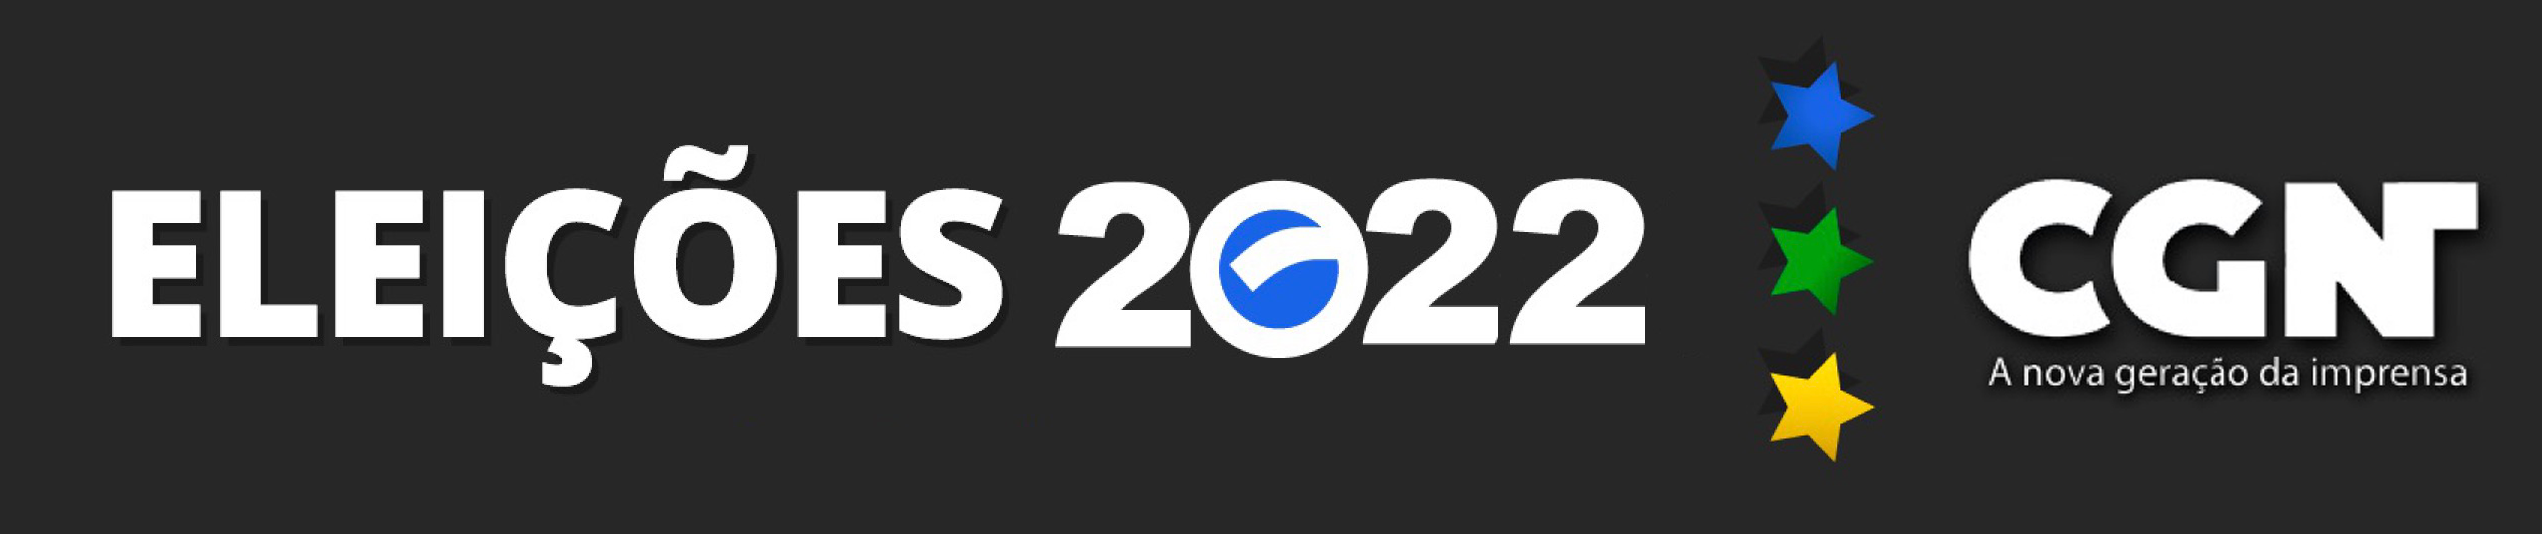 Eleições 2022 - CGN